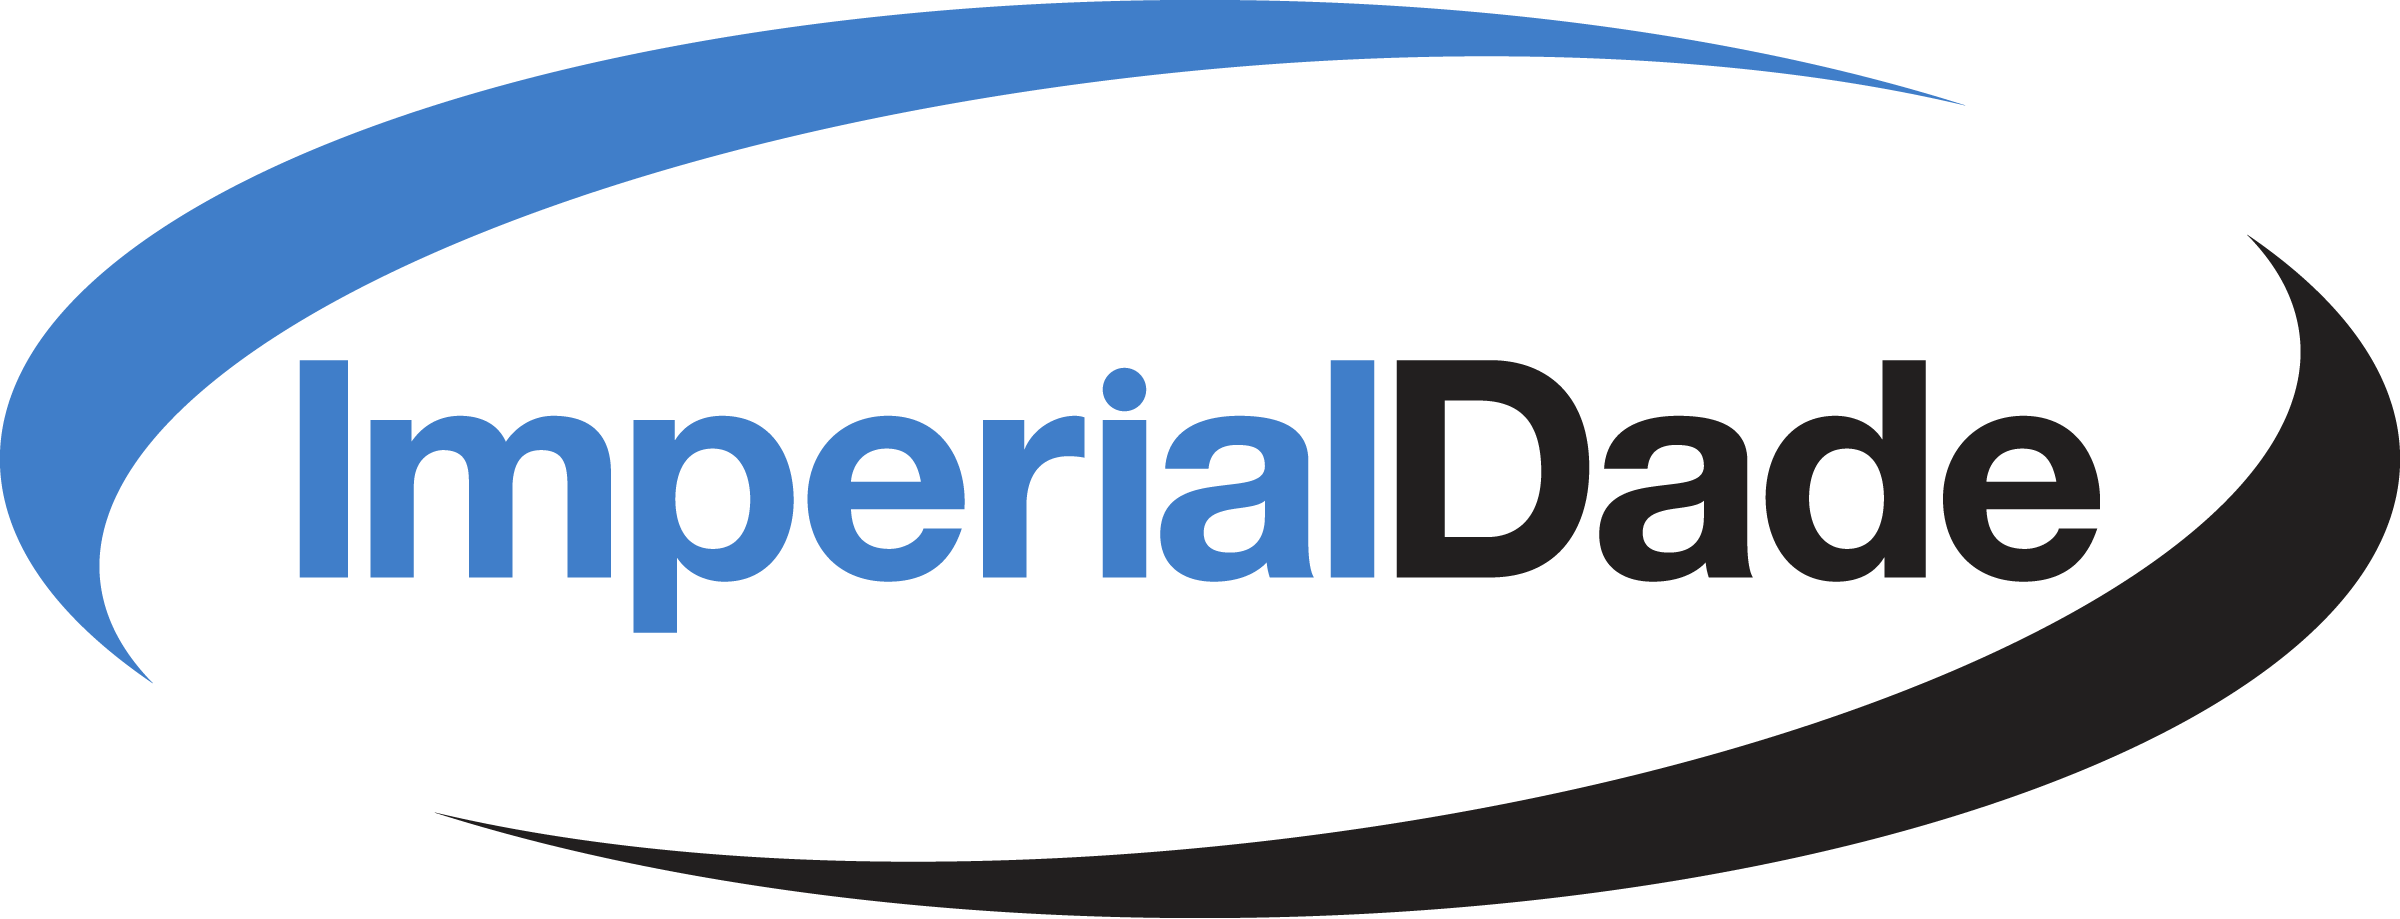 Imperial Dade Logo